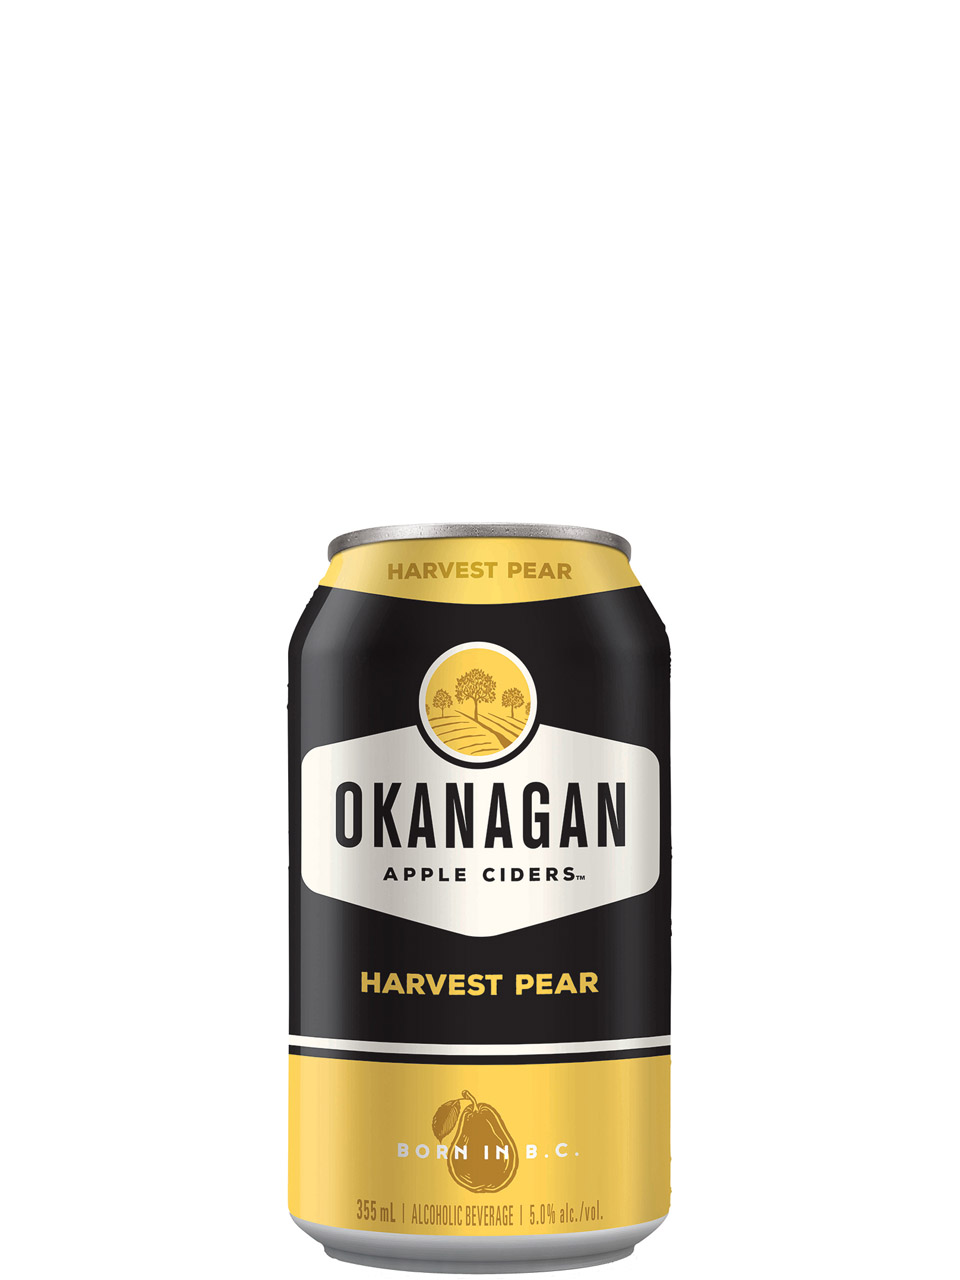 Okanagan Harvest Pear Cider 6 Pack Cans